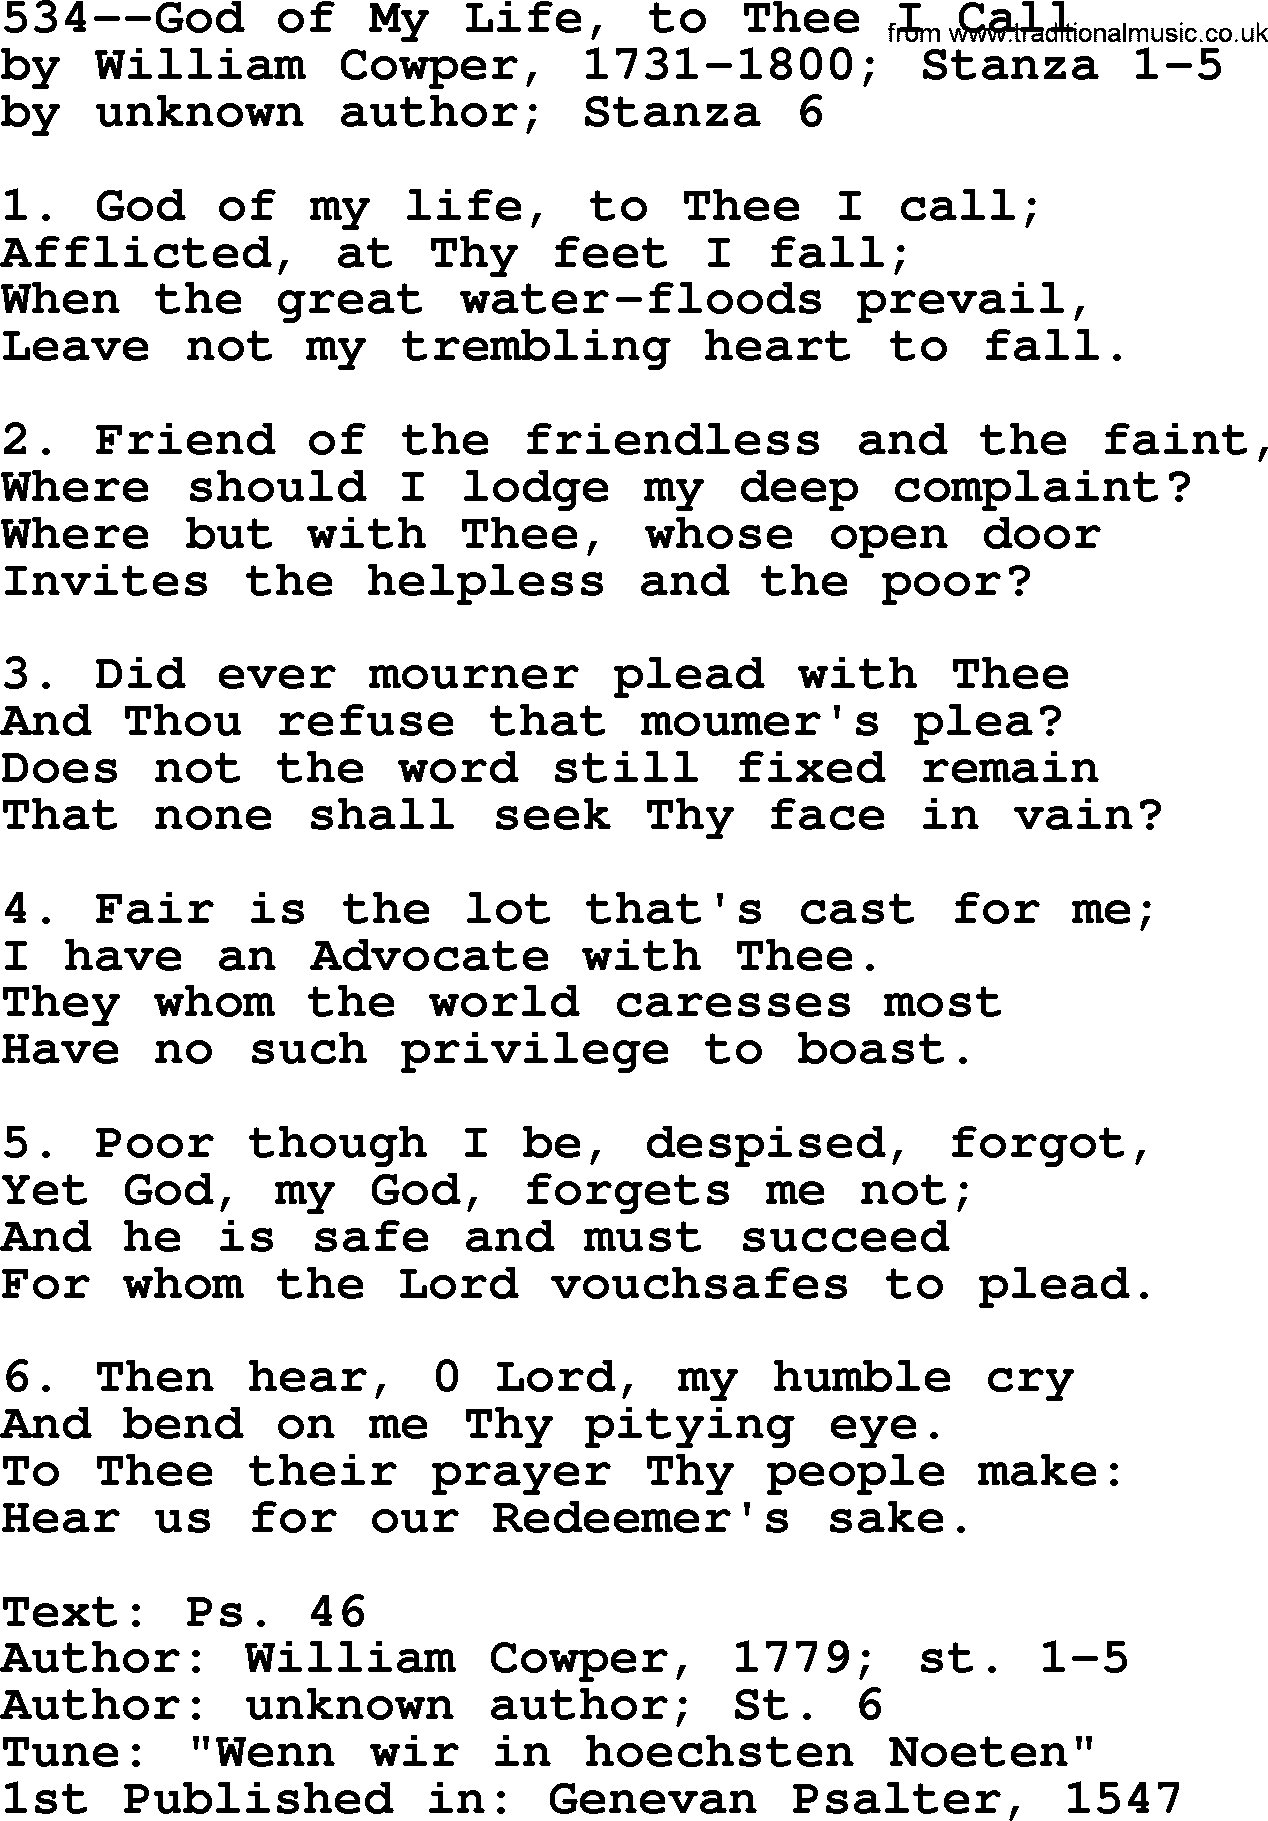 Lutheran Hymn: 534--God of My Life, to Thee I Call.txt lyrics with PDF